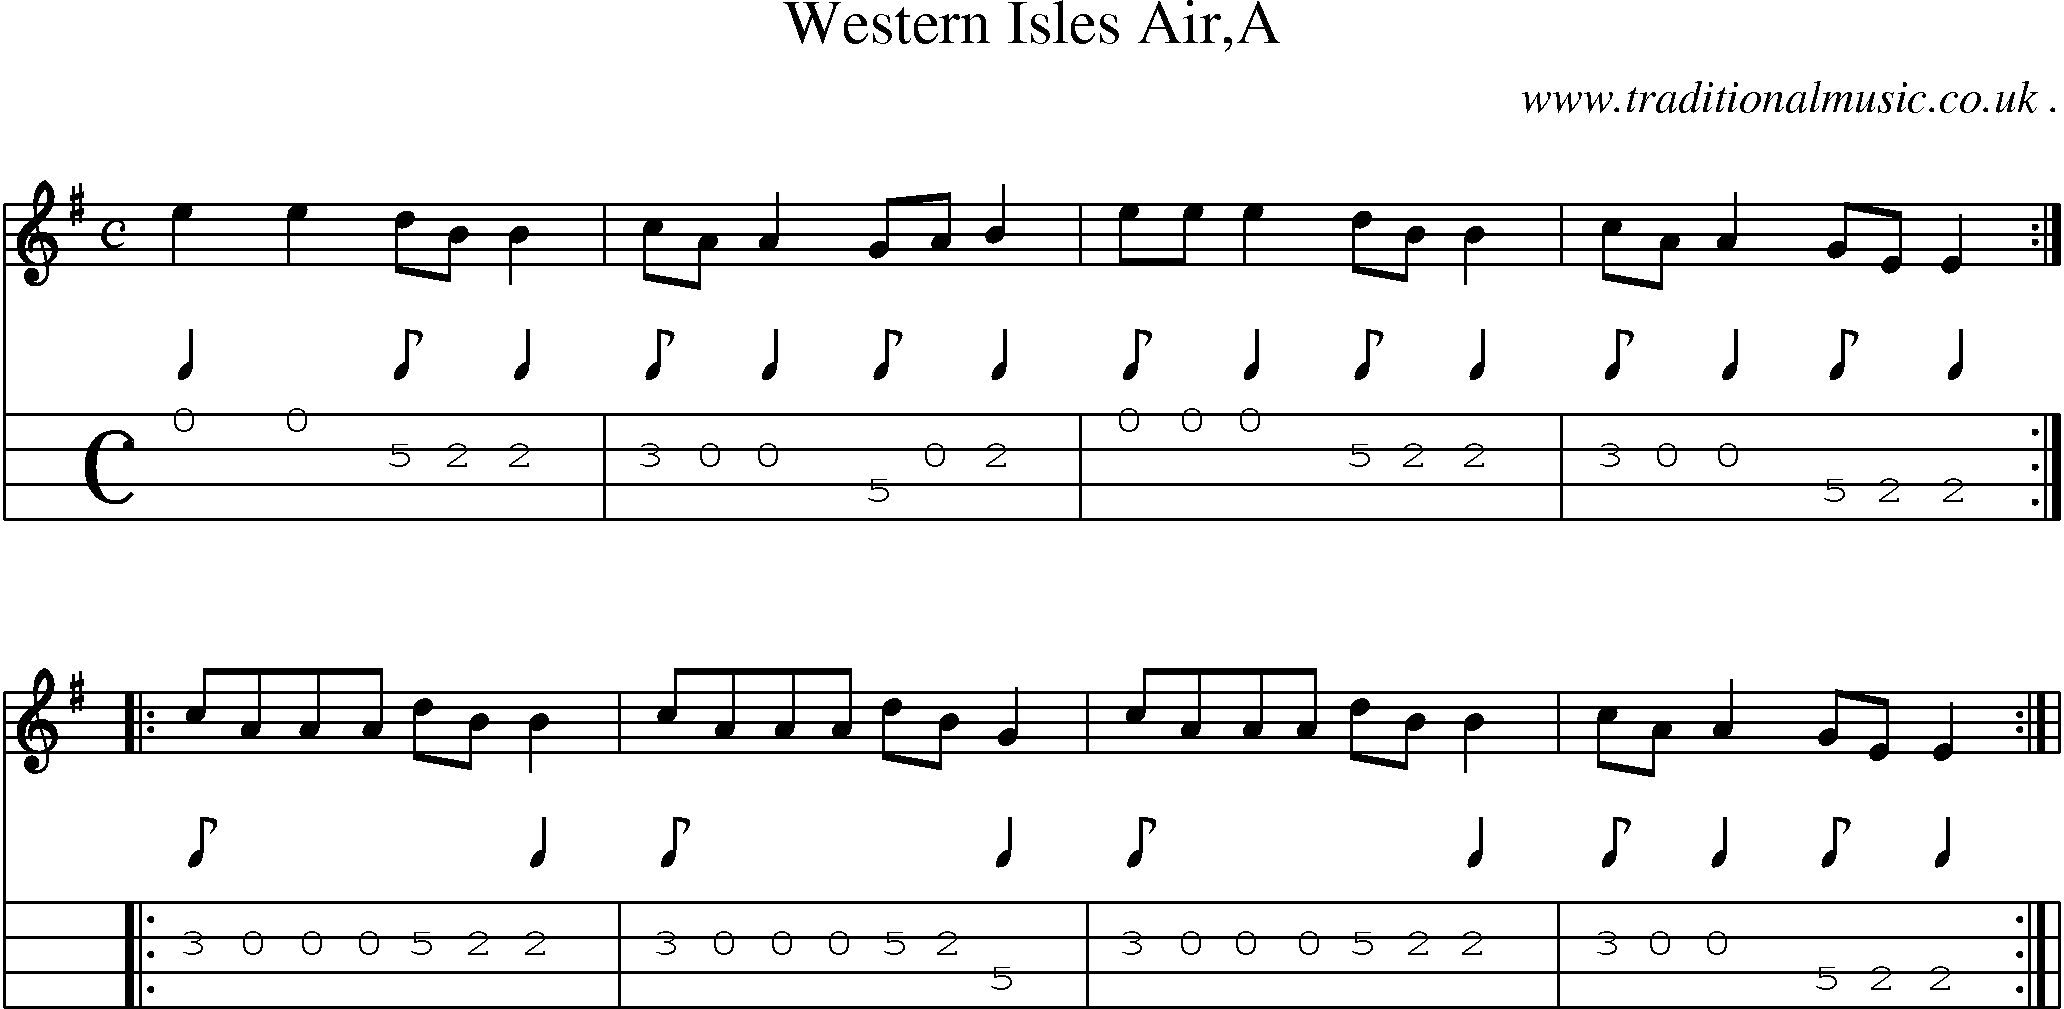 Sheet-Music and Mandolin Tabs for Western Isles Aira